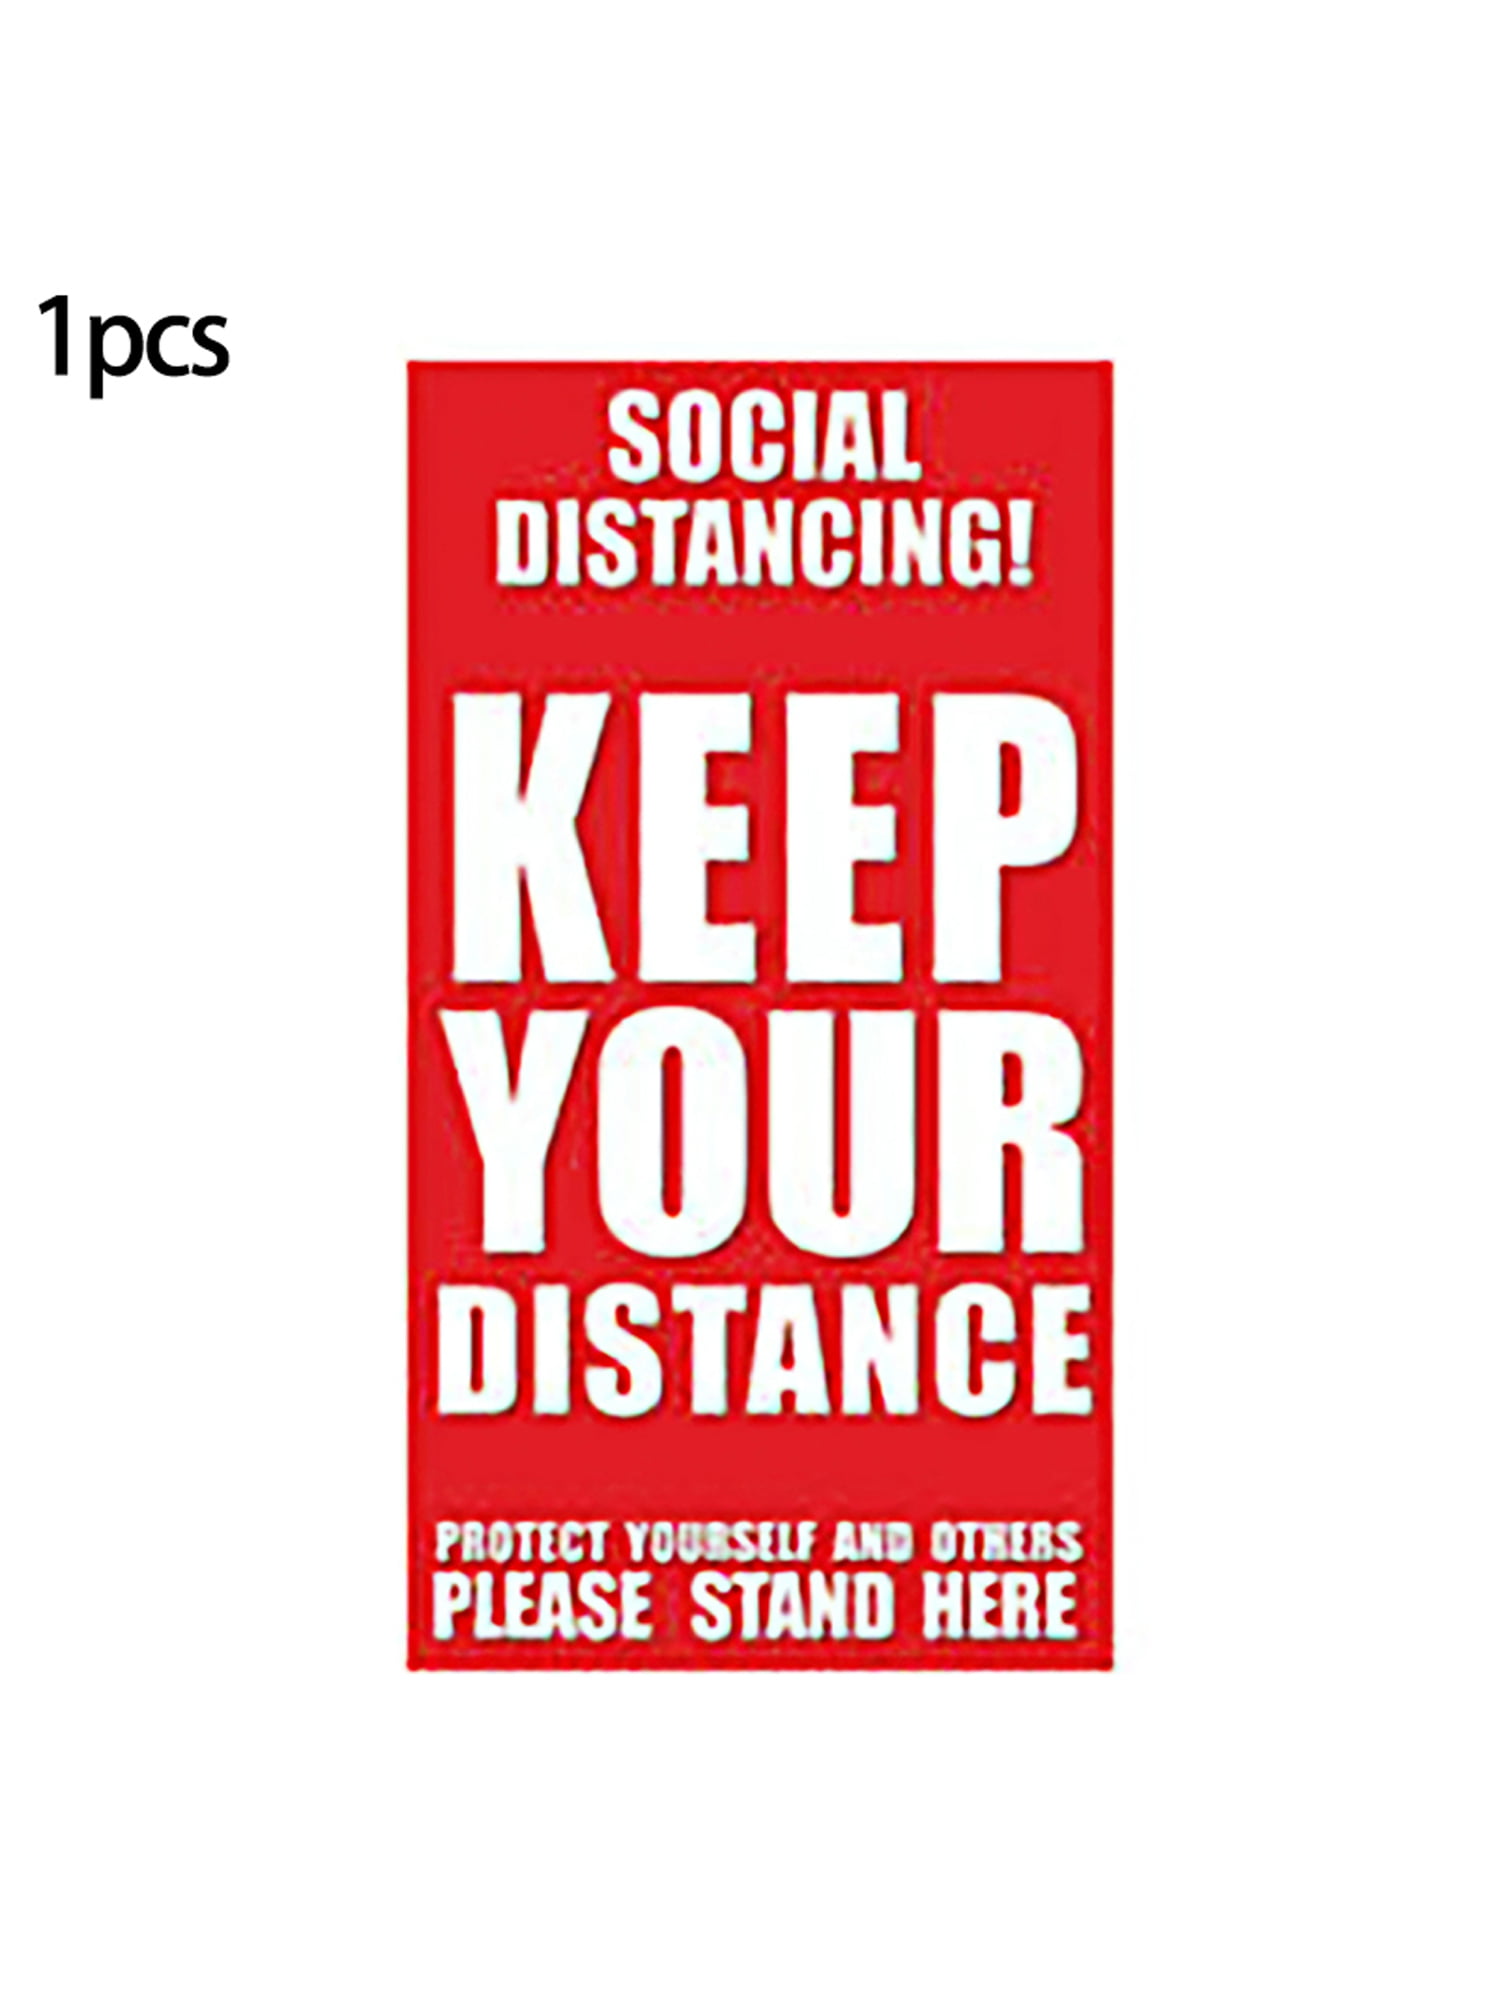 Social Distancing Floor Door Wall Window Stickers Keep 2M Distance Warning Signs 